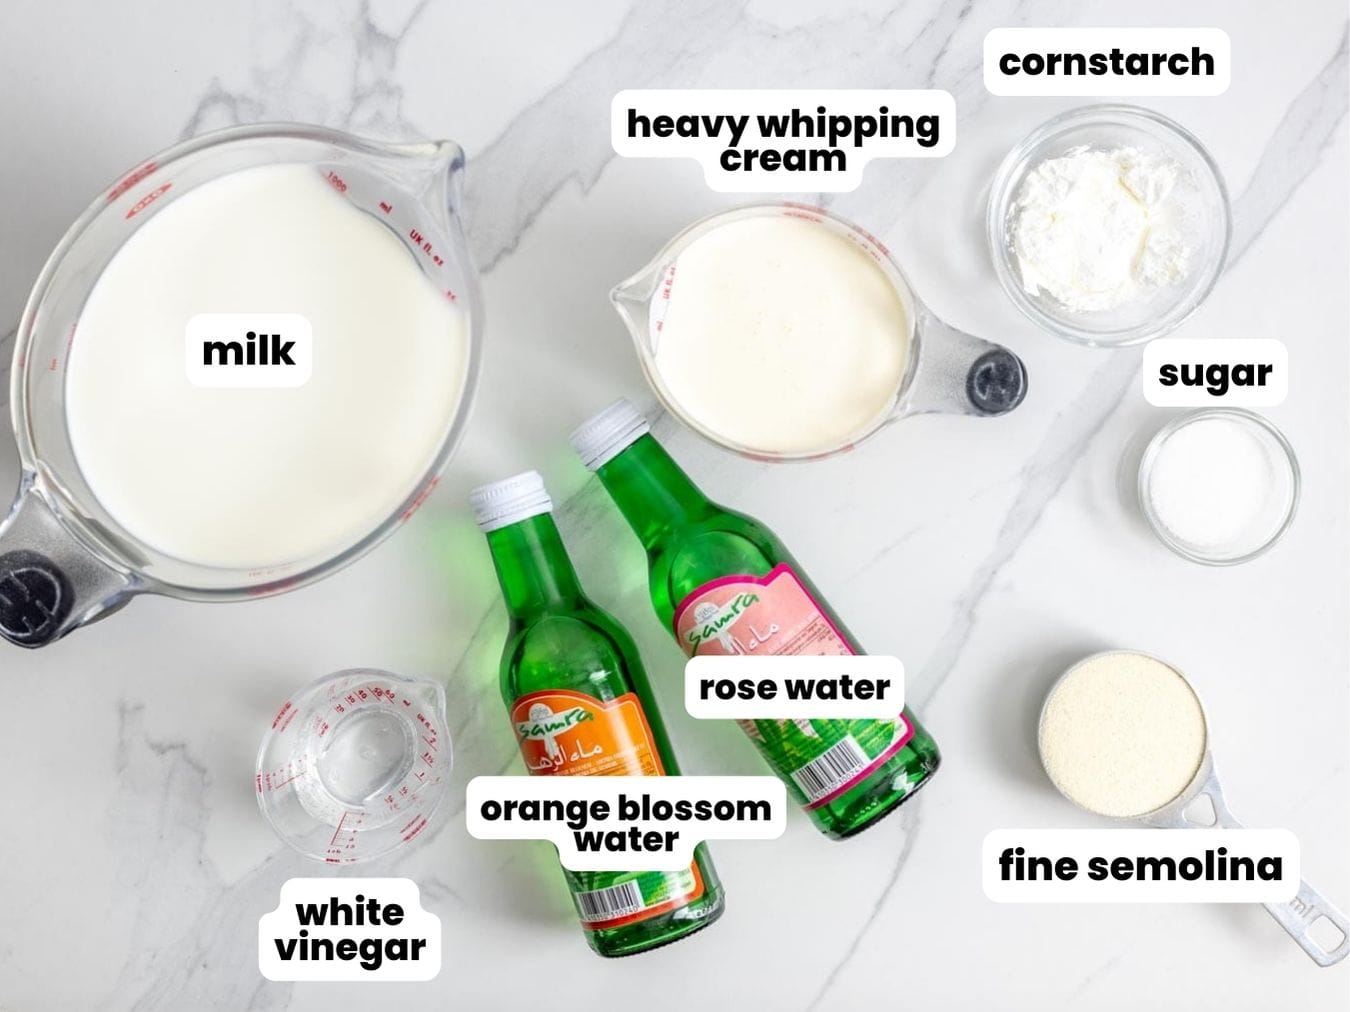 Ingredients needed to make ashta cream